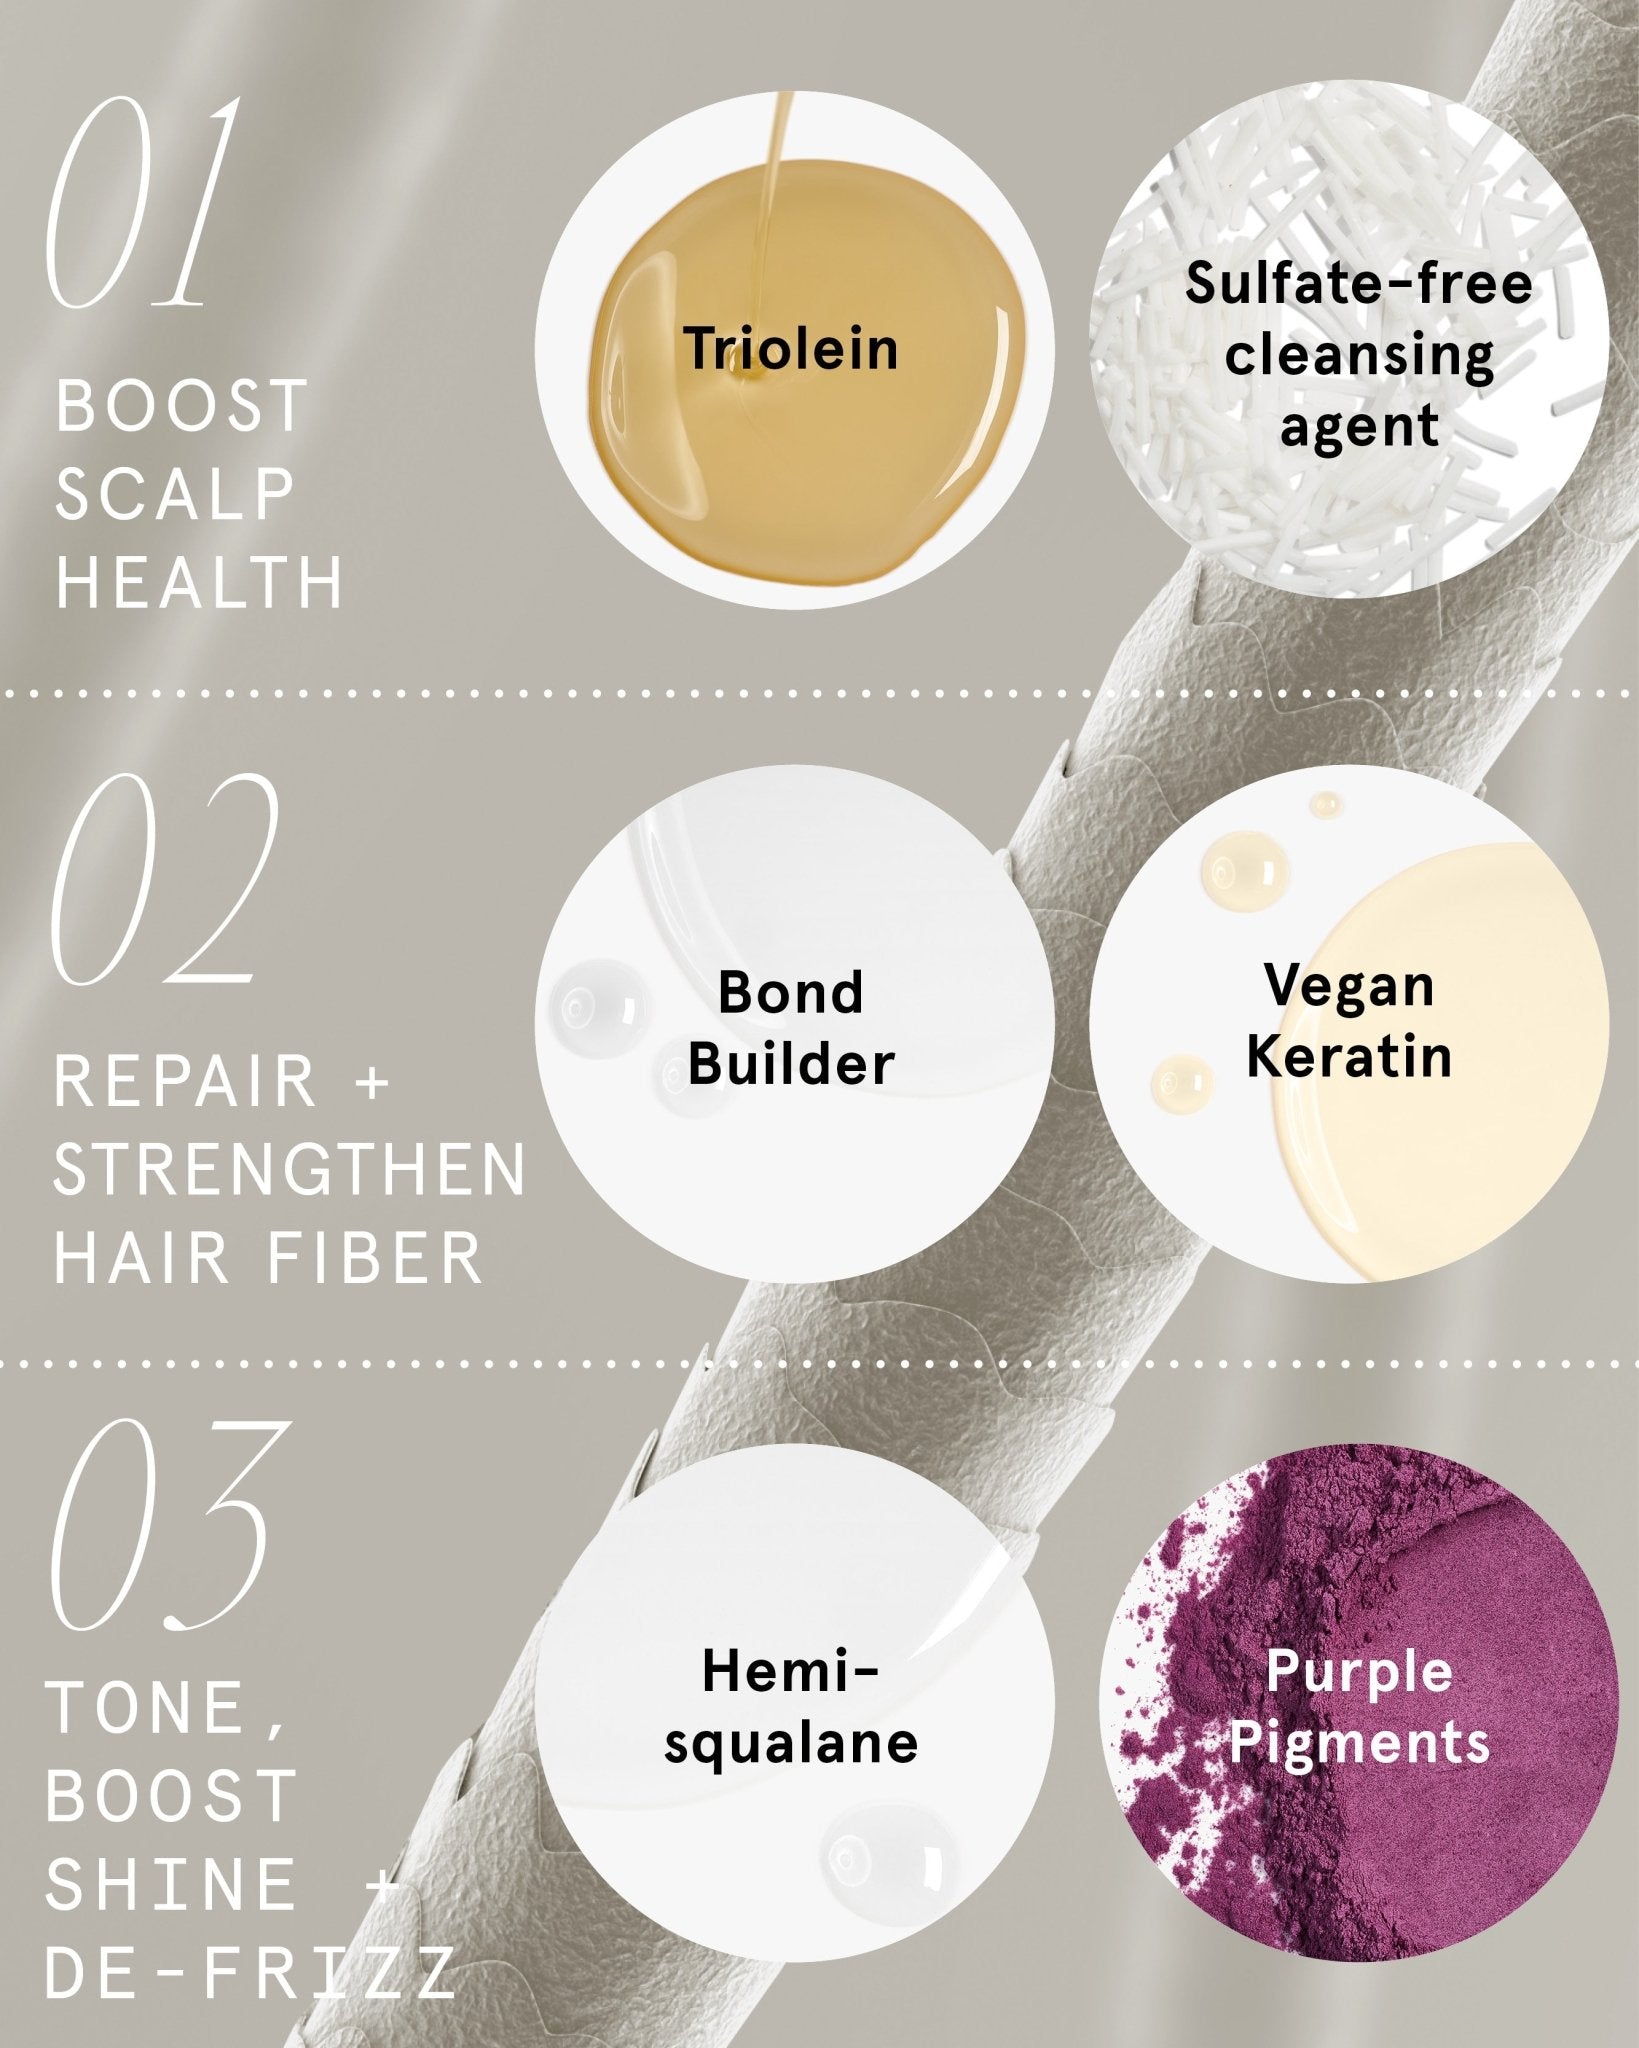 Purple Shampoo Bar for Blonde, Highlighted, White Hair - Superzero - Consumerhaus